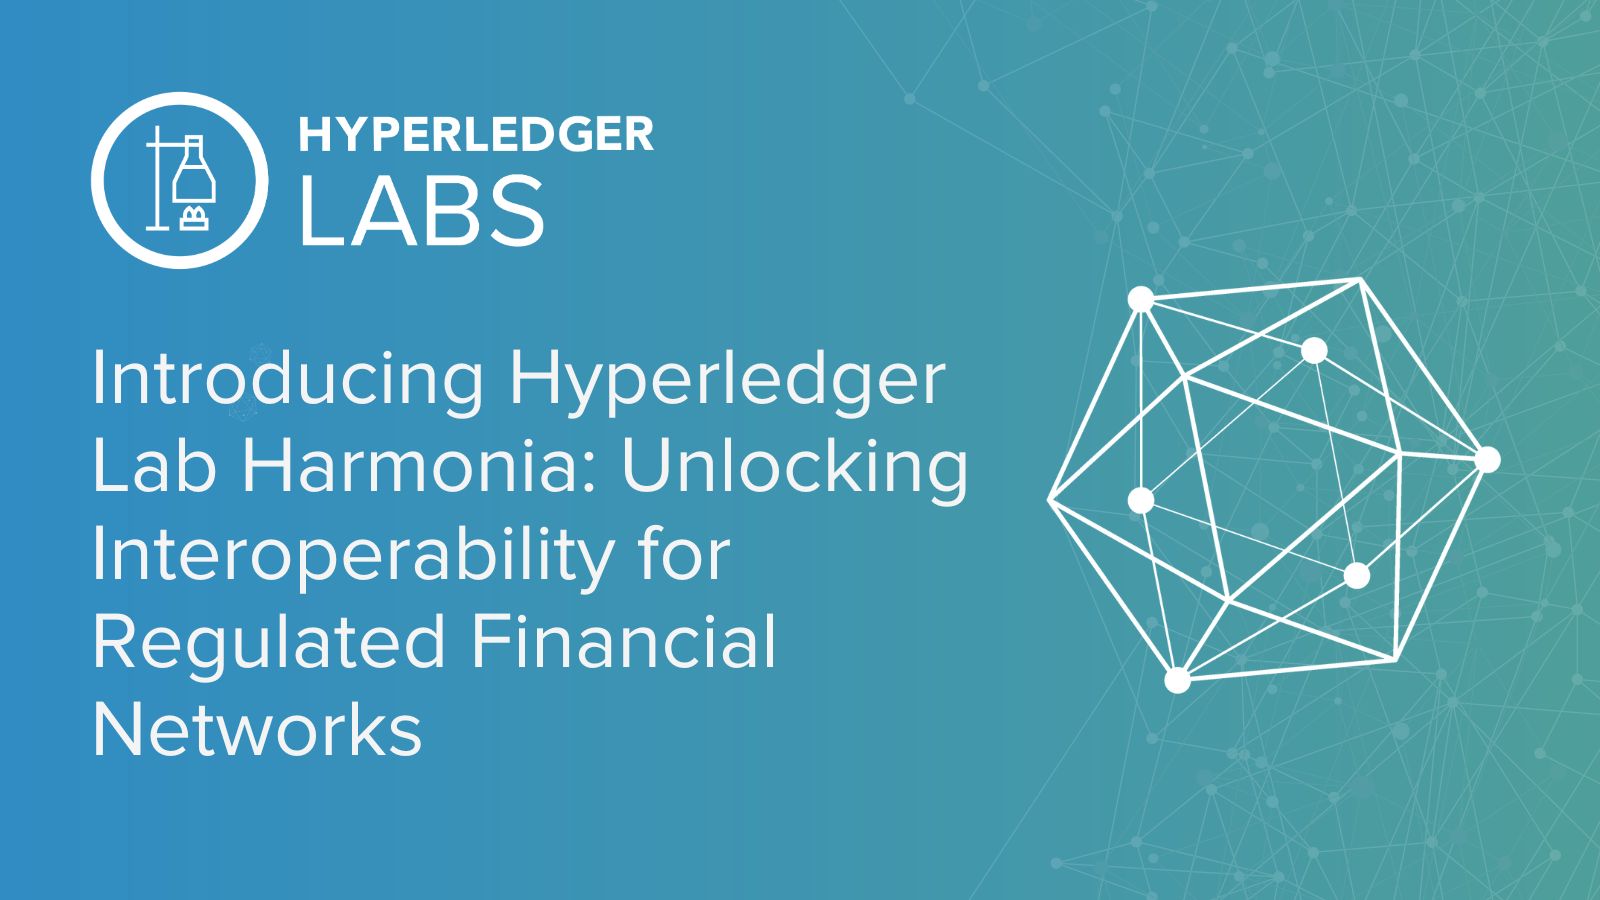 Introducing Hyperledger Lab Harmonia: Unlocking Interoperability for Regulated Financial Networks